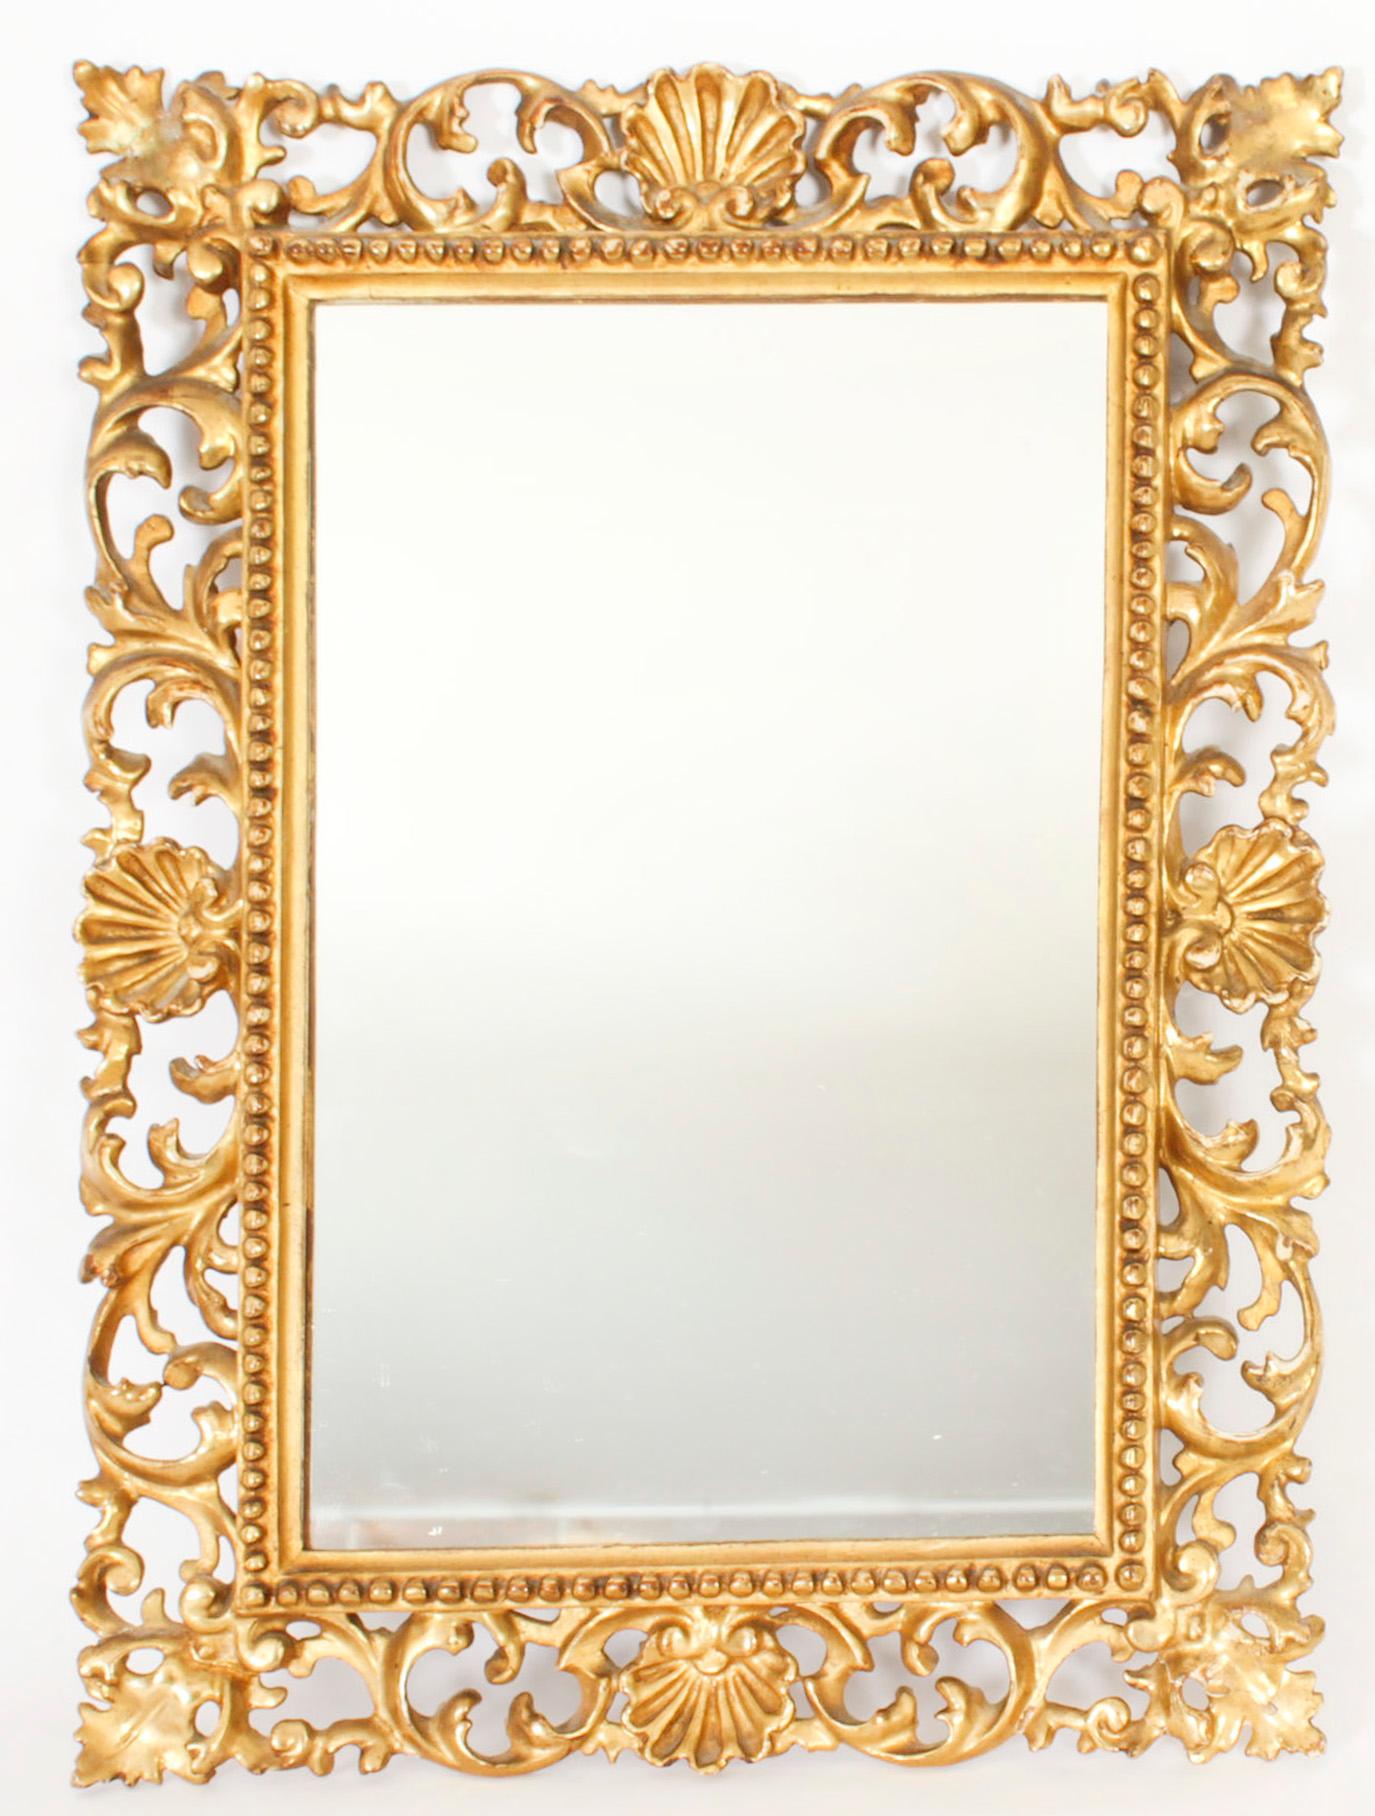 Antique Italian Giltwood Florentine Mirror 19th Century 40 x 30cm For Sale 8